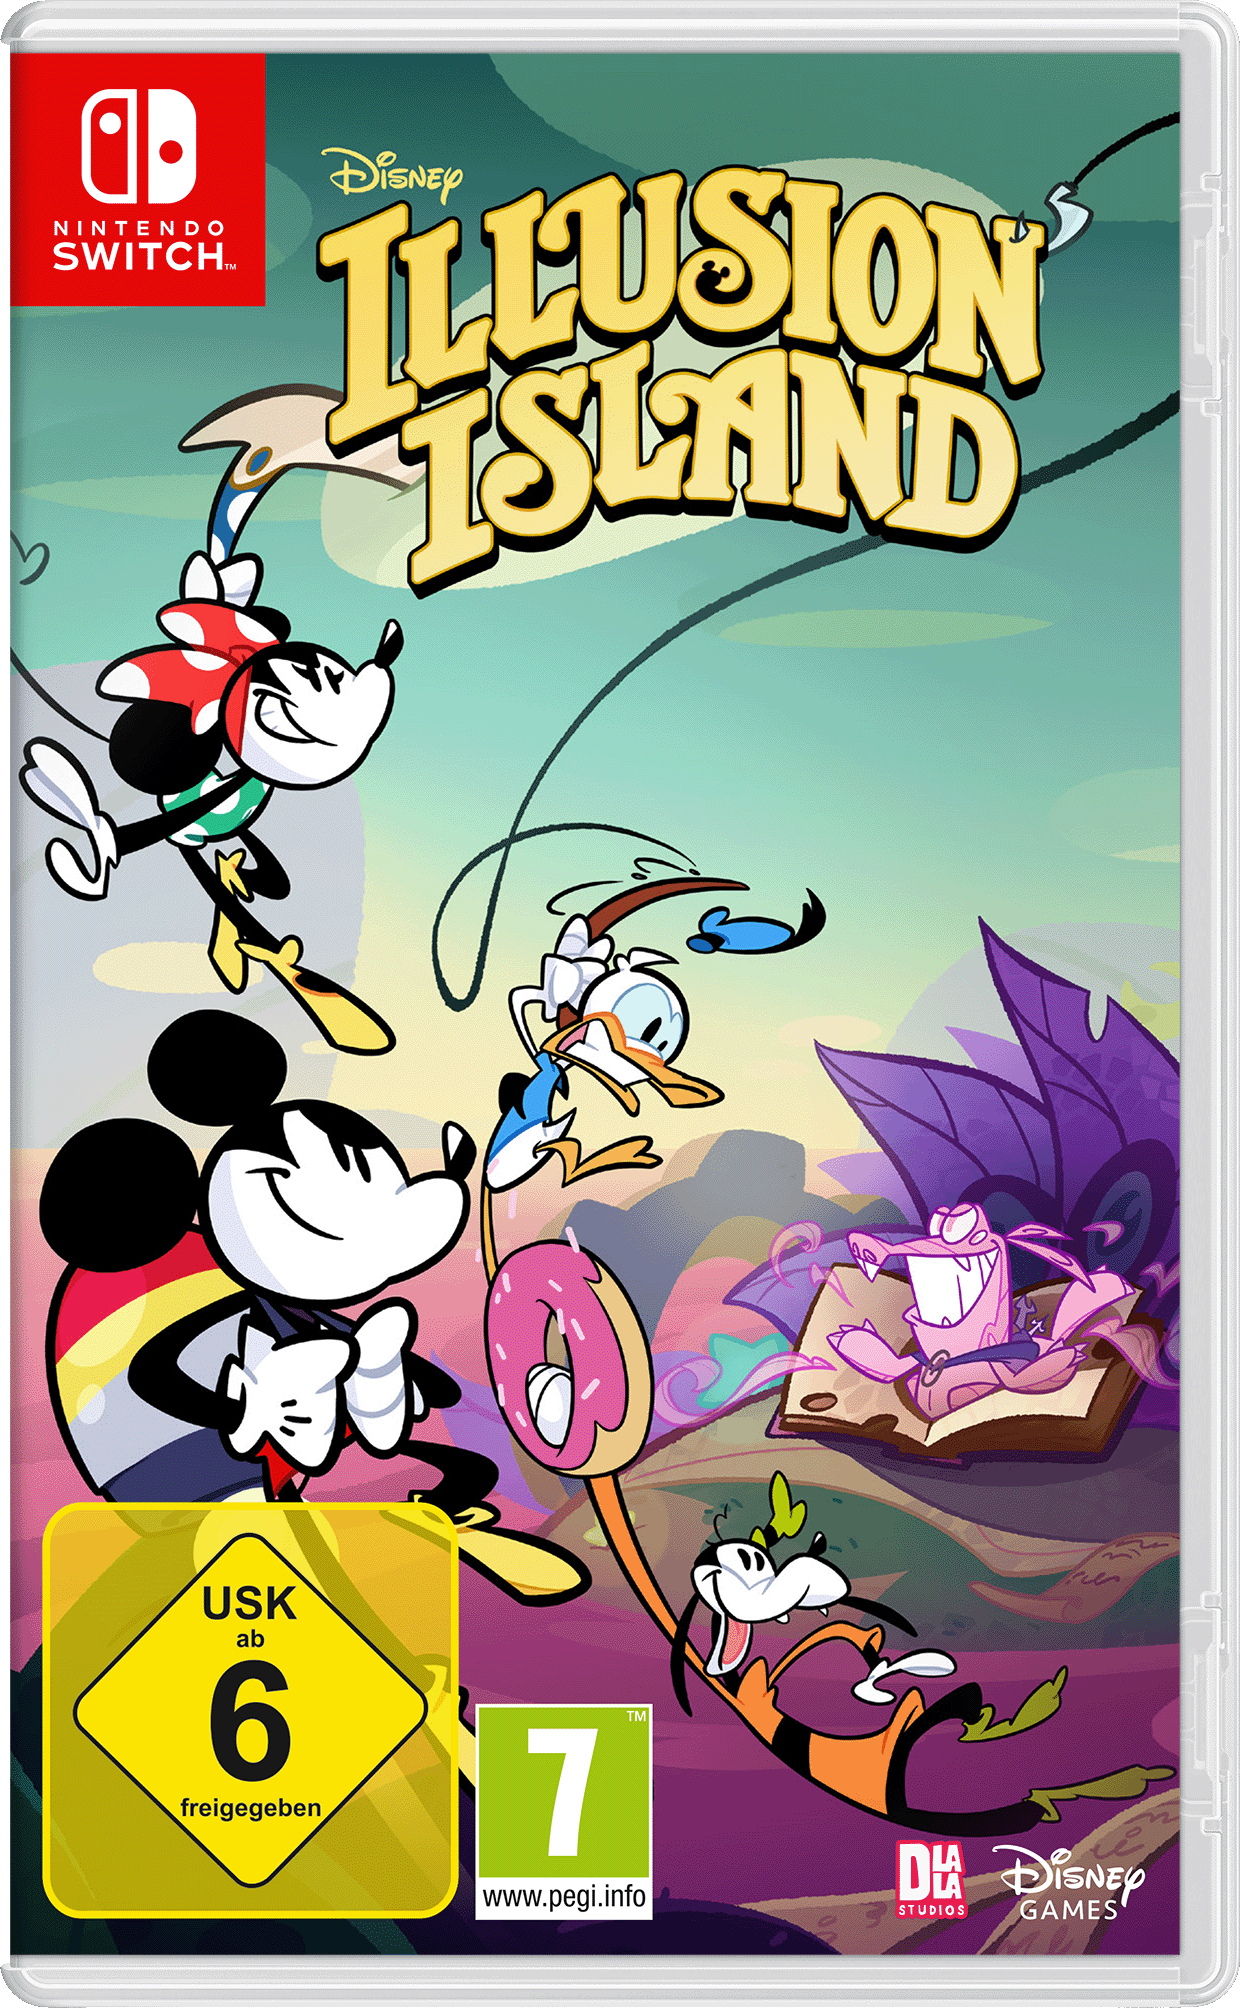 Island - [Nintendo Disney Switch] Illusions